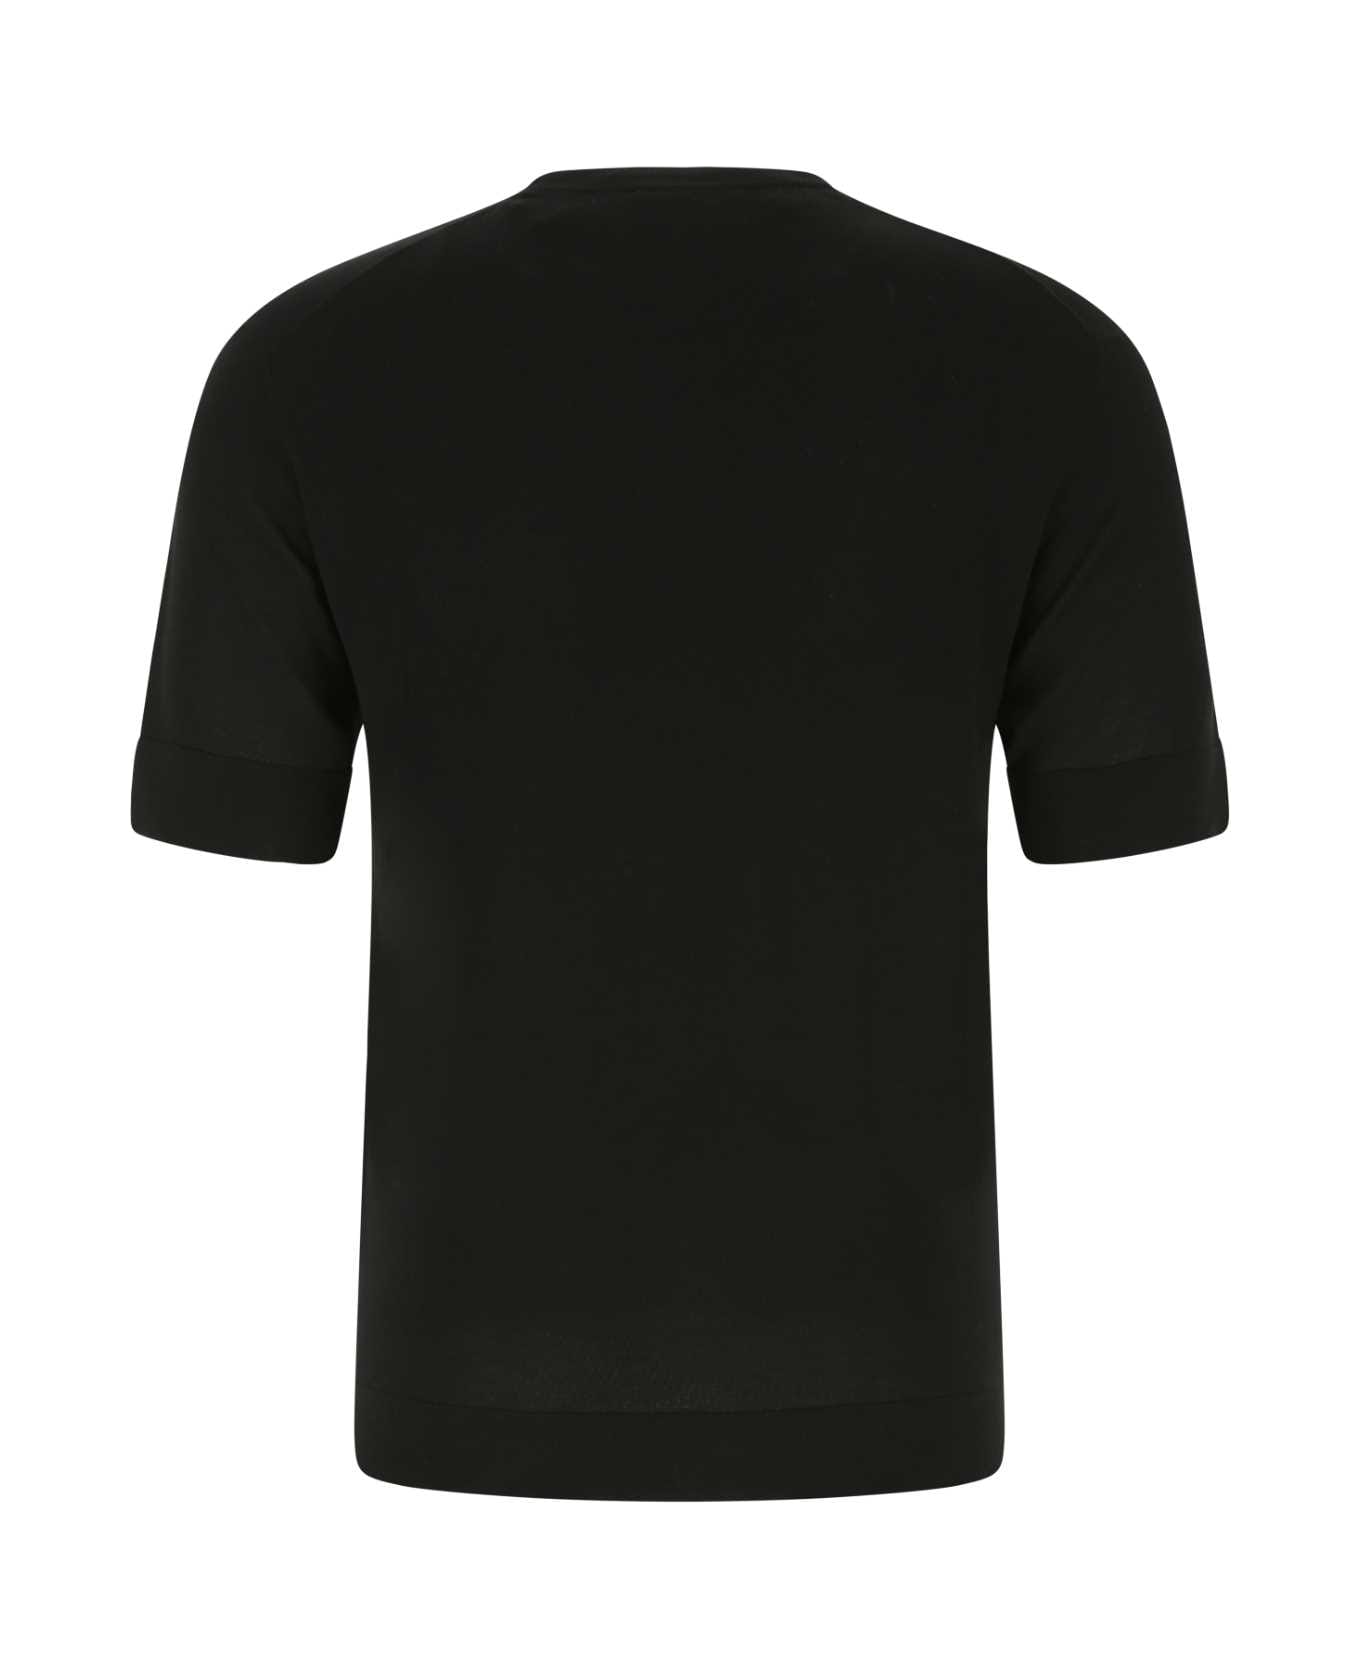 PT Torino Black Cotton Blend T-shirt - 0990 シャツ